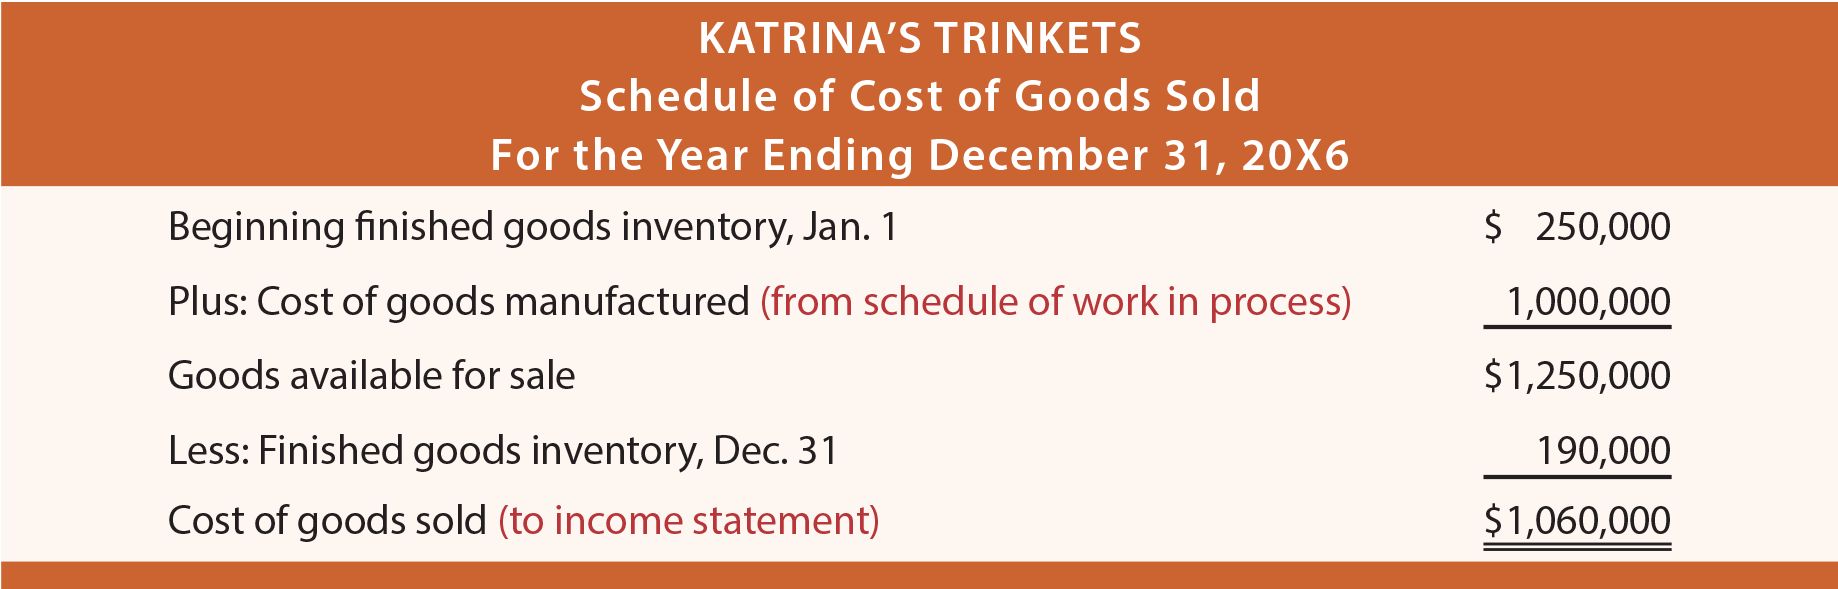 Schedule of Cost of Goods Sold